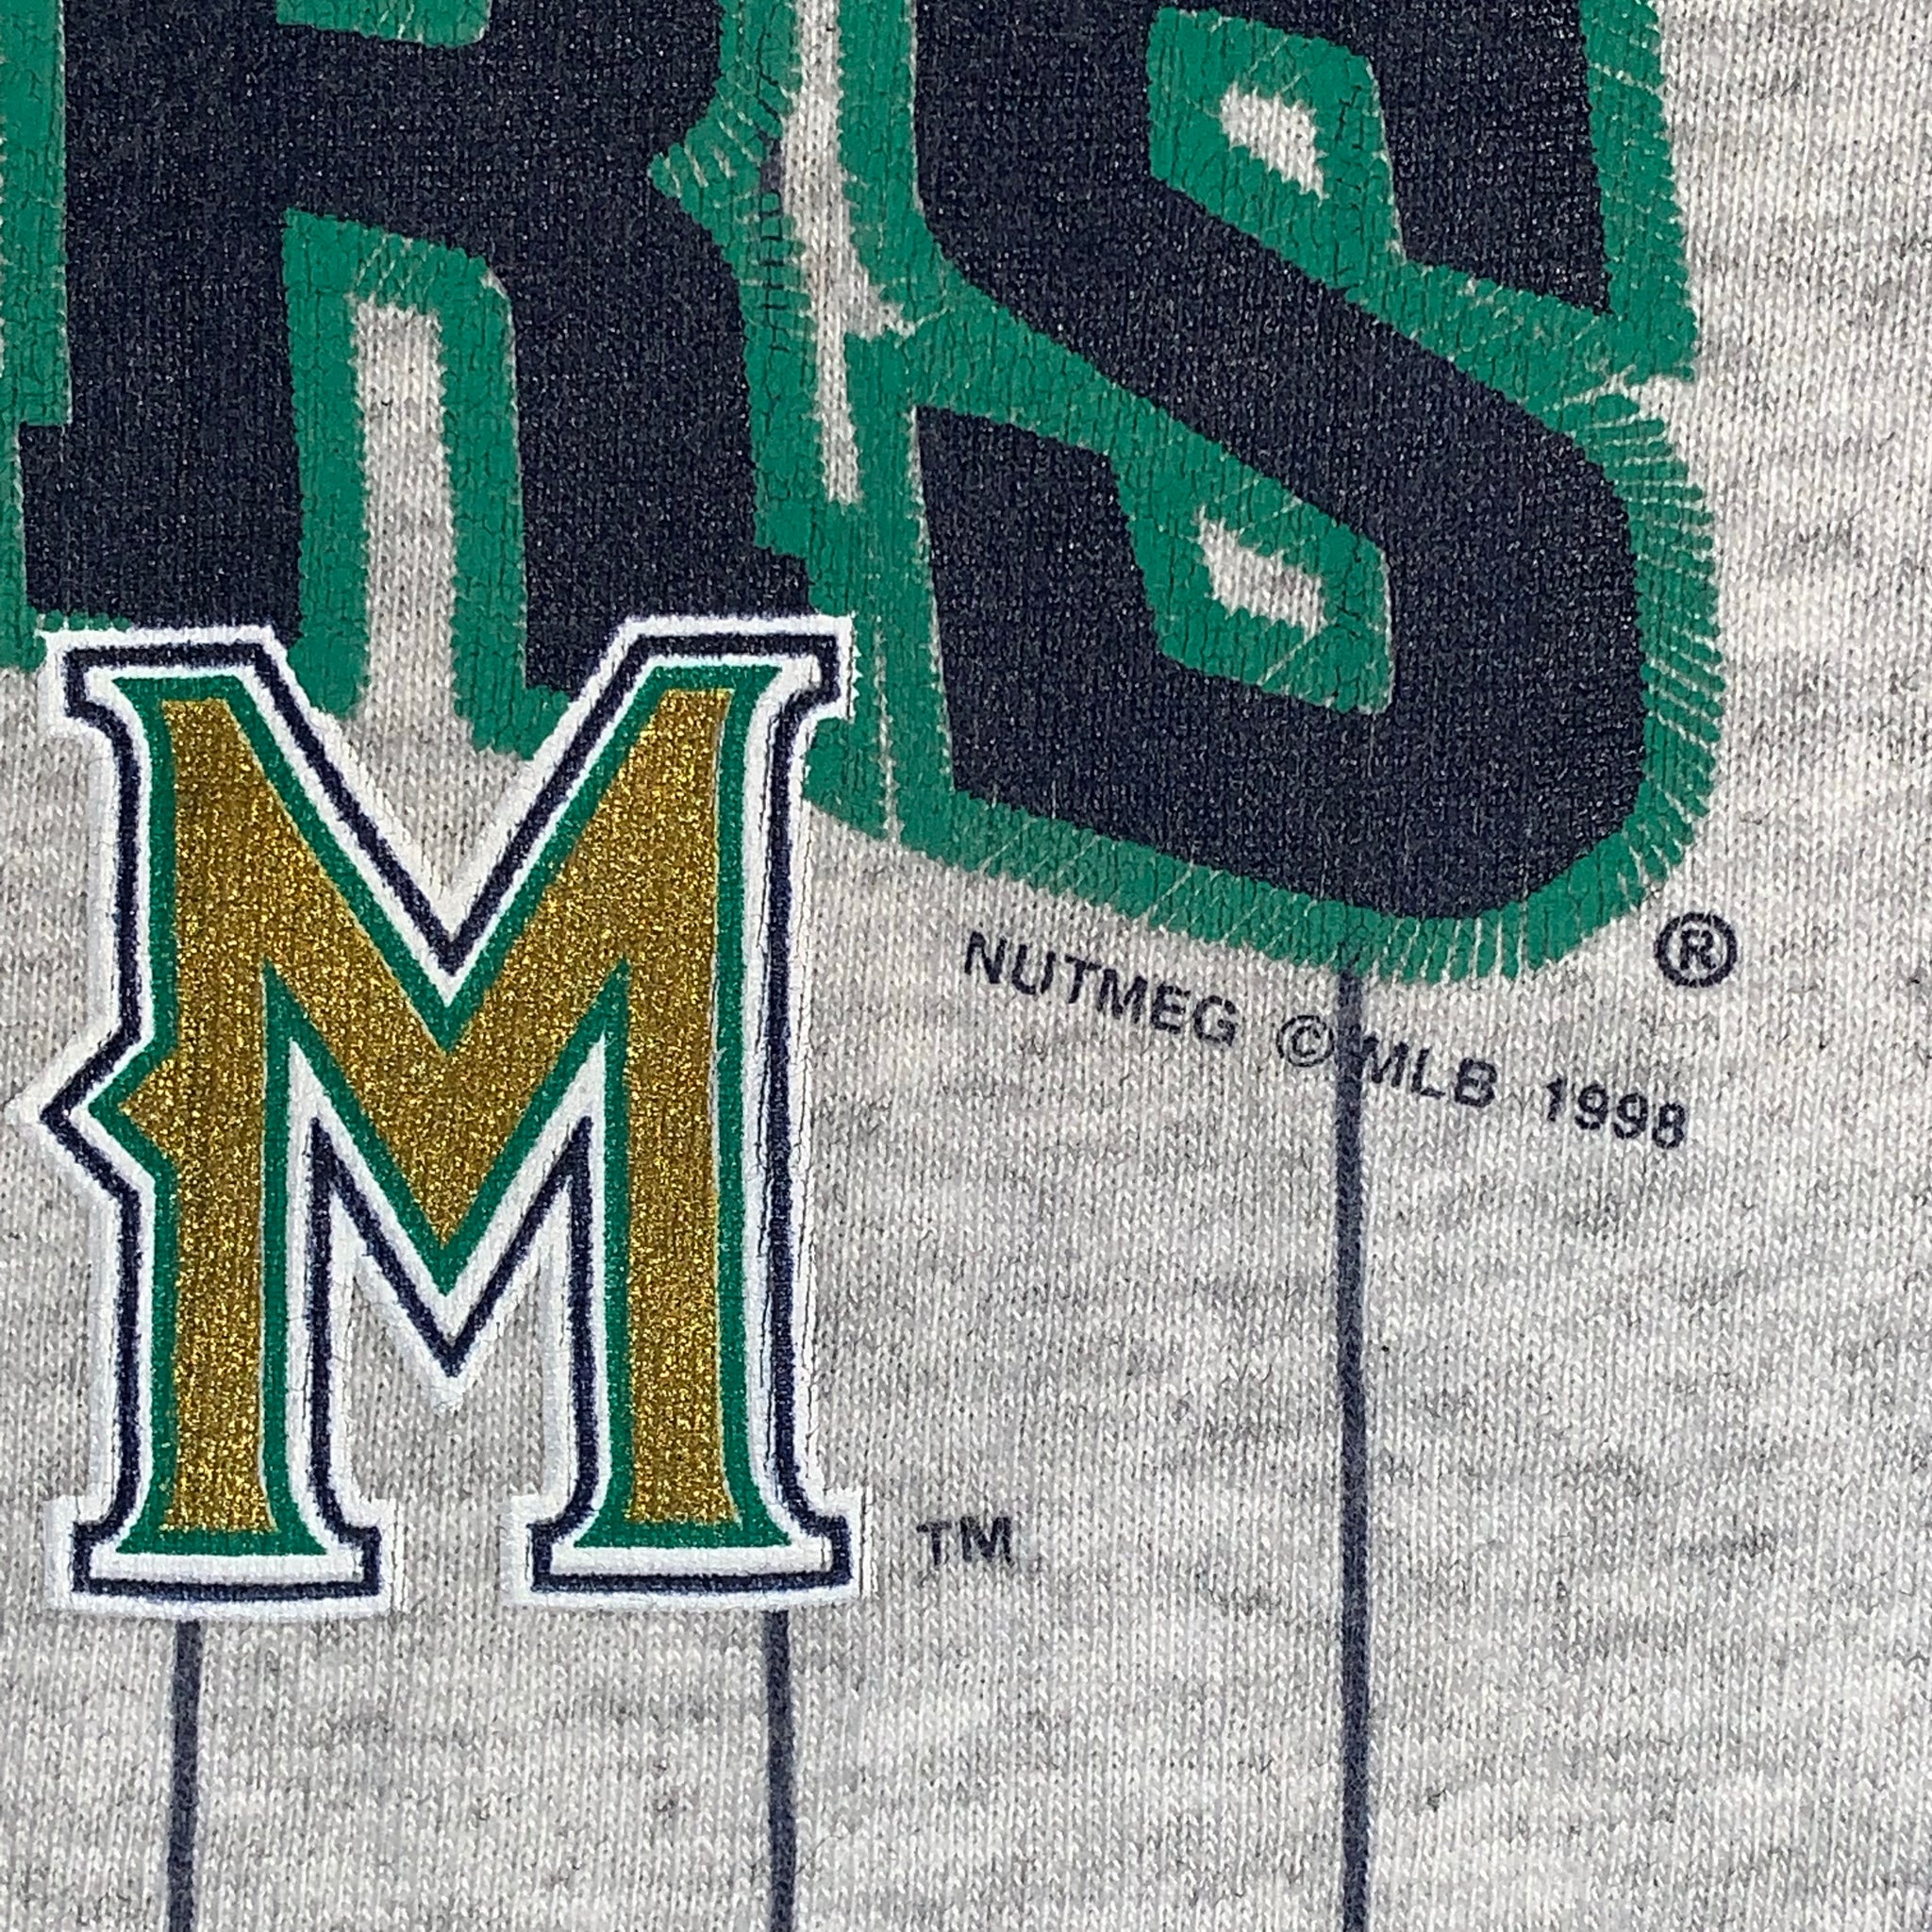 Brewers' 1990 retro jersey shirt – League Tees